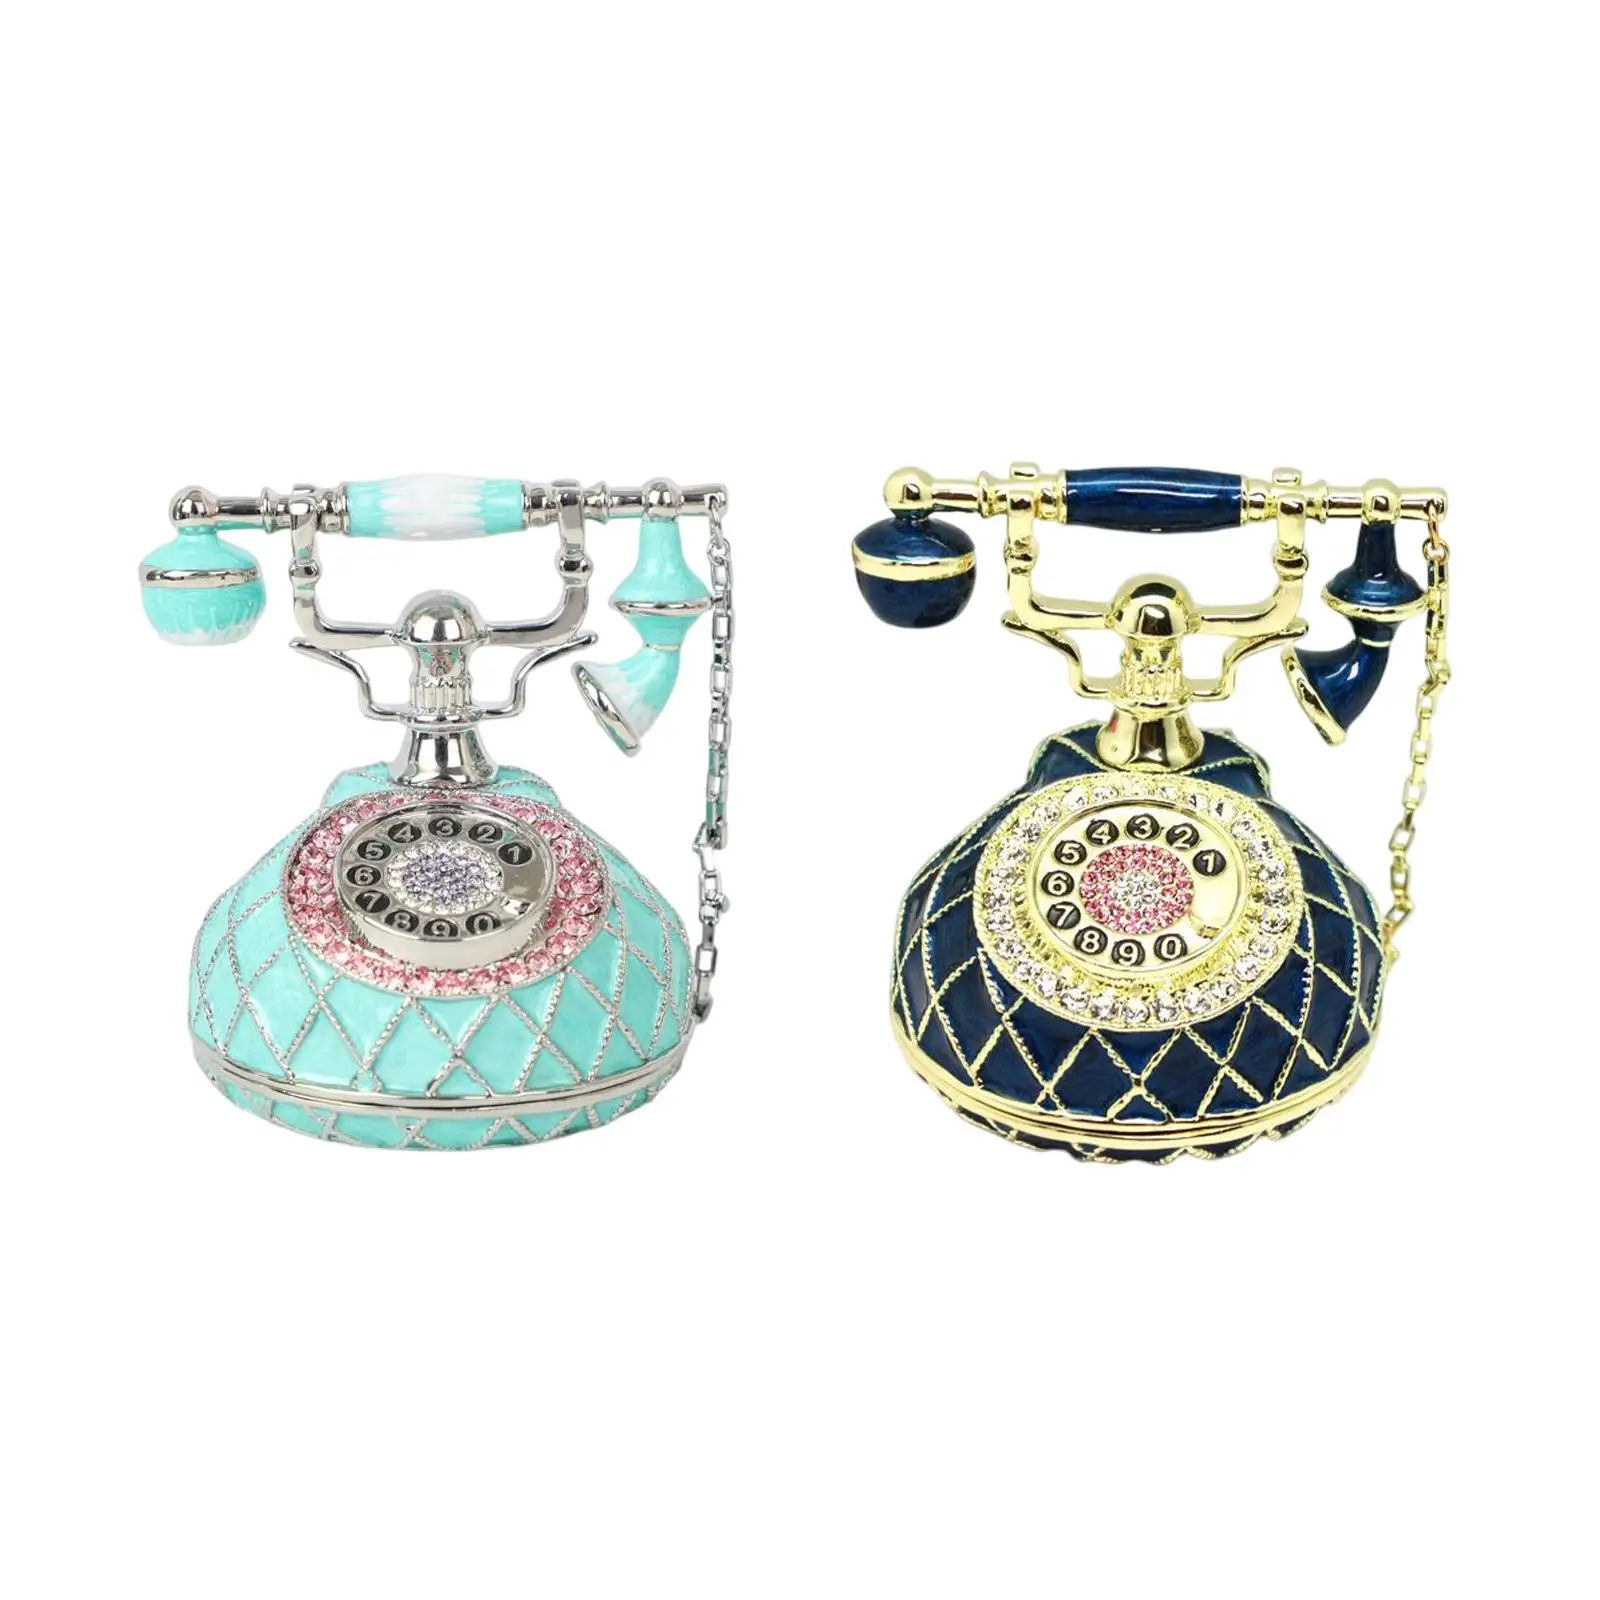 European Style Telephone Statue Jewelry Trinket Box Decoration Decorative Keepsake Gift Case for Earrings Rings Bracelet Watch